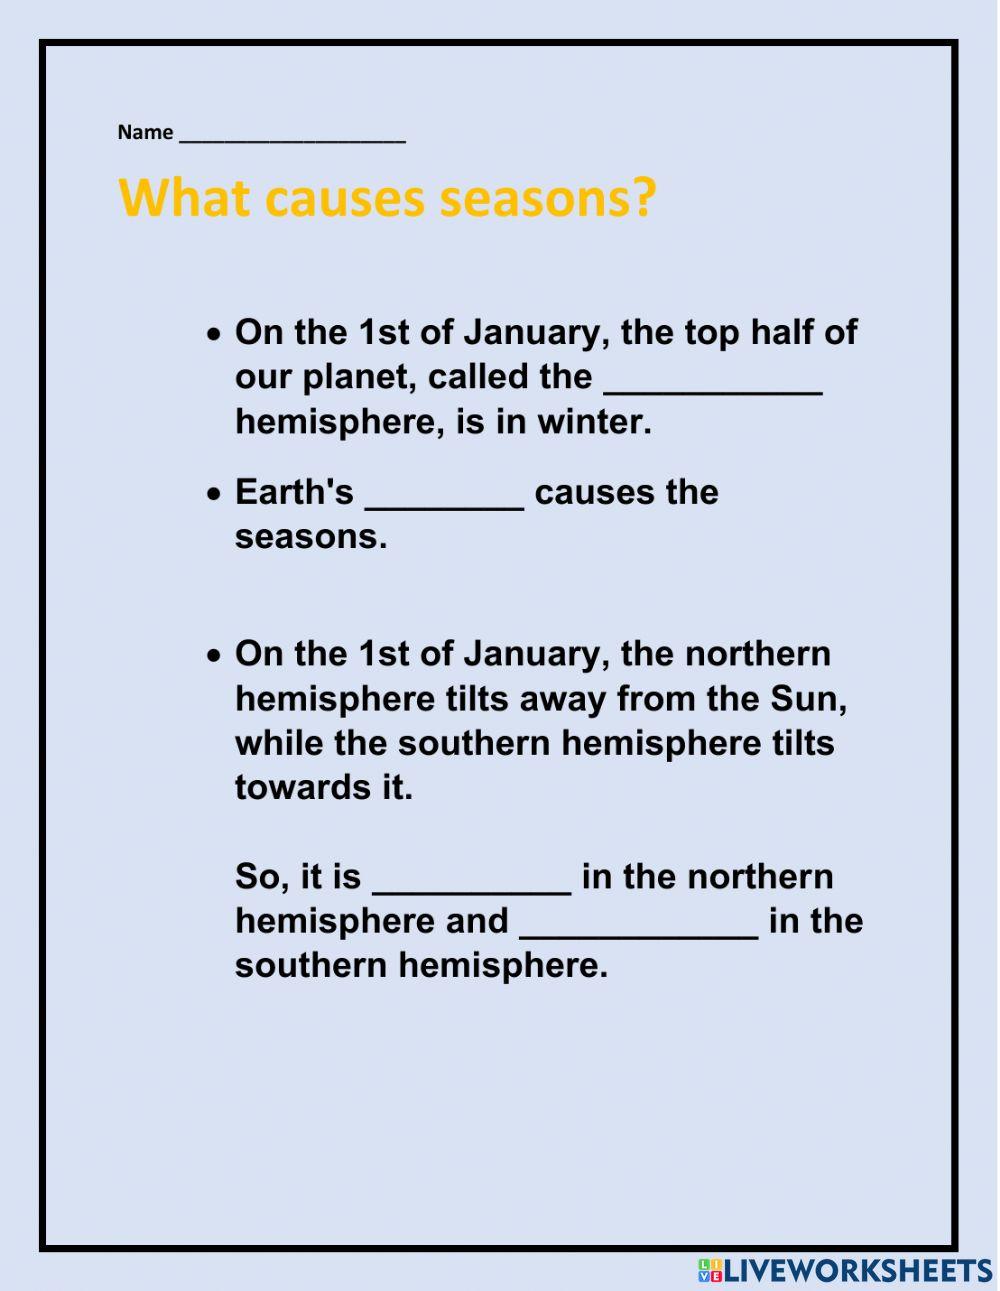 What causes seasons?